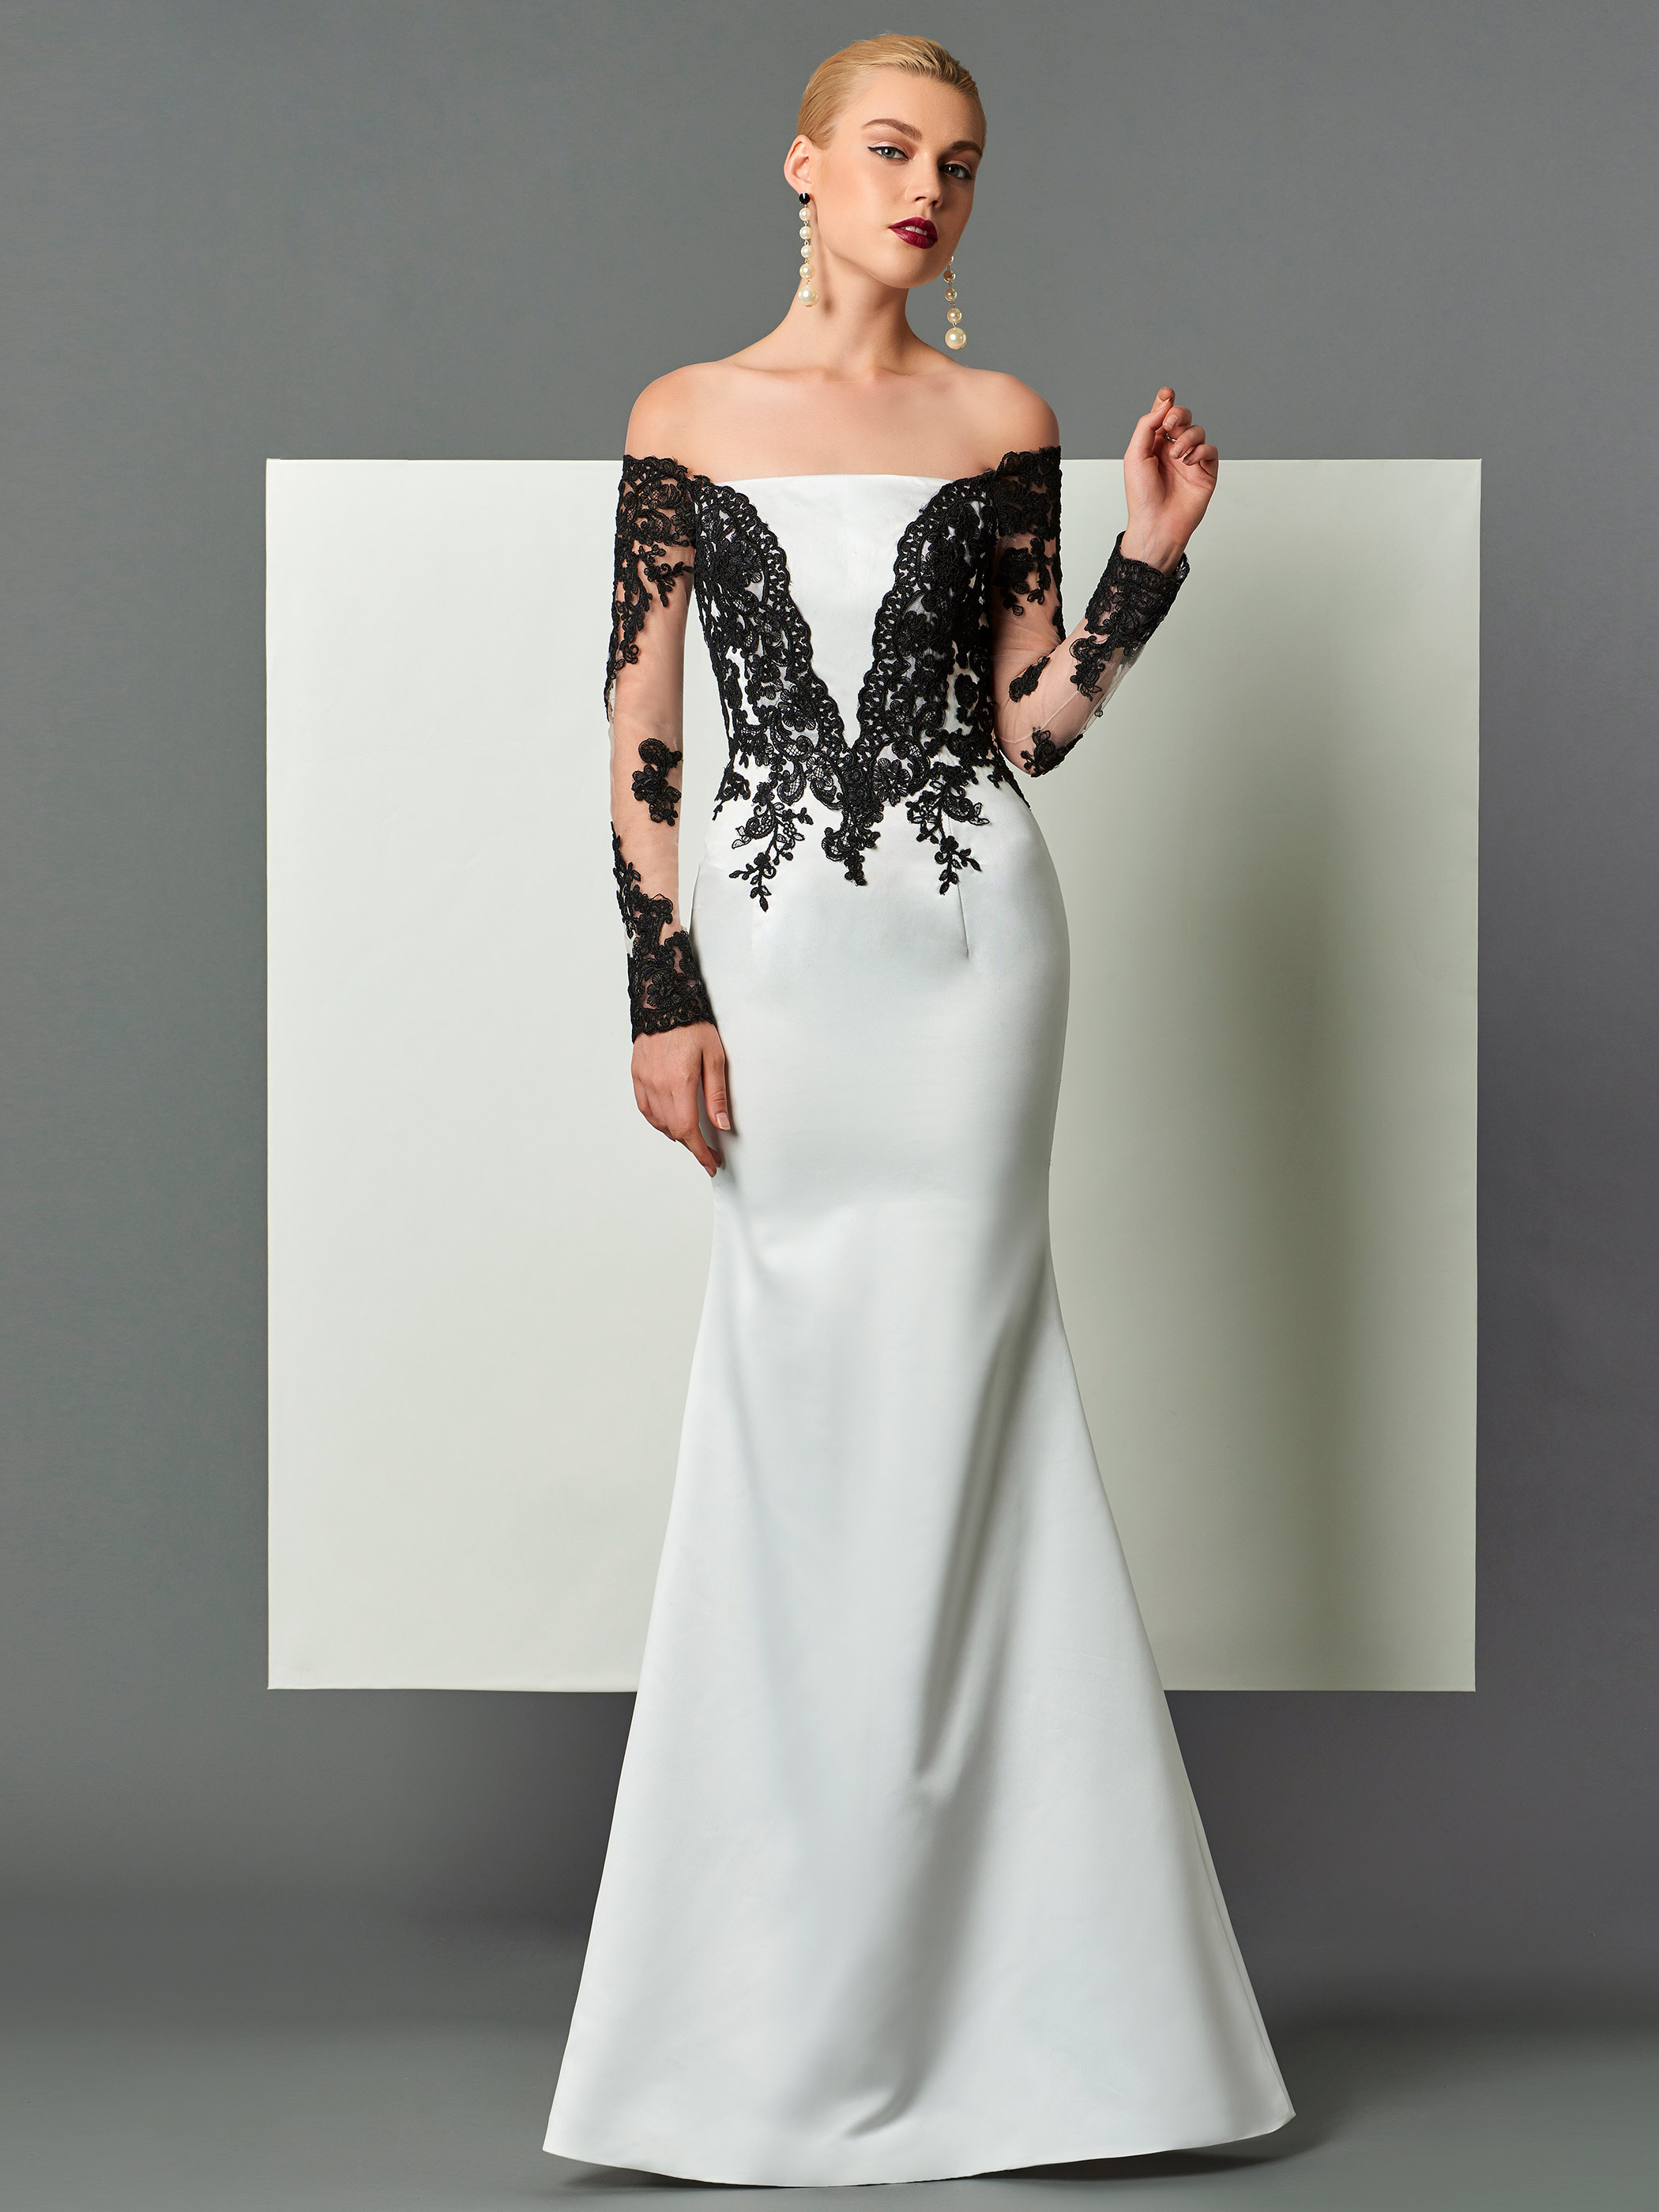 Ericdress Elegant Sheath/Column Sheer Scoop Neck Long Sleeve Evening Dress